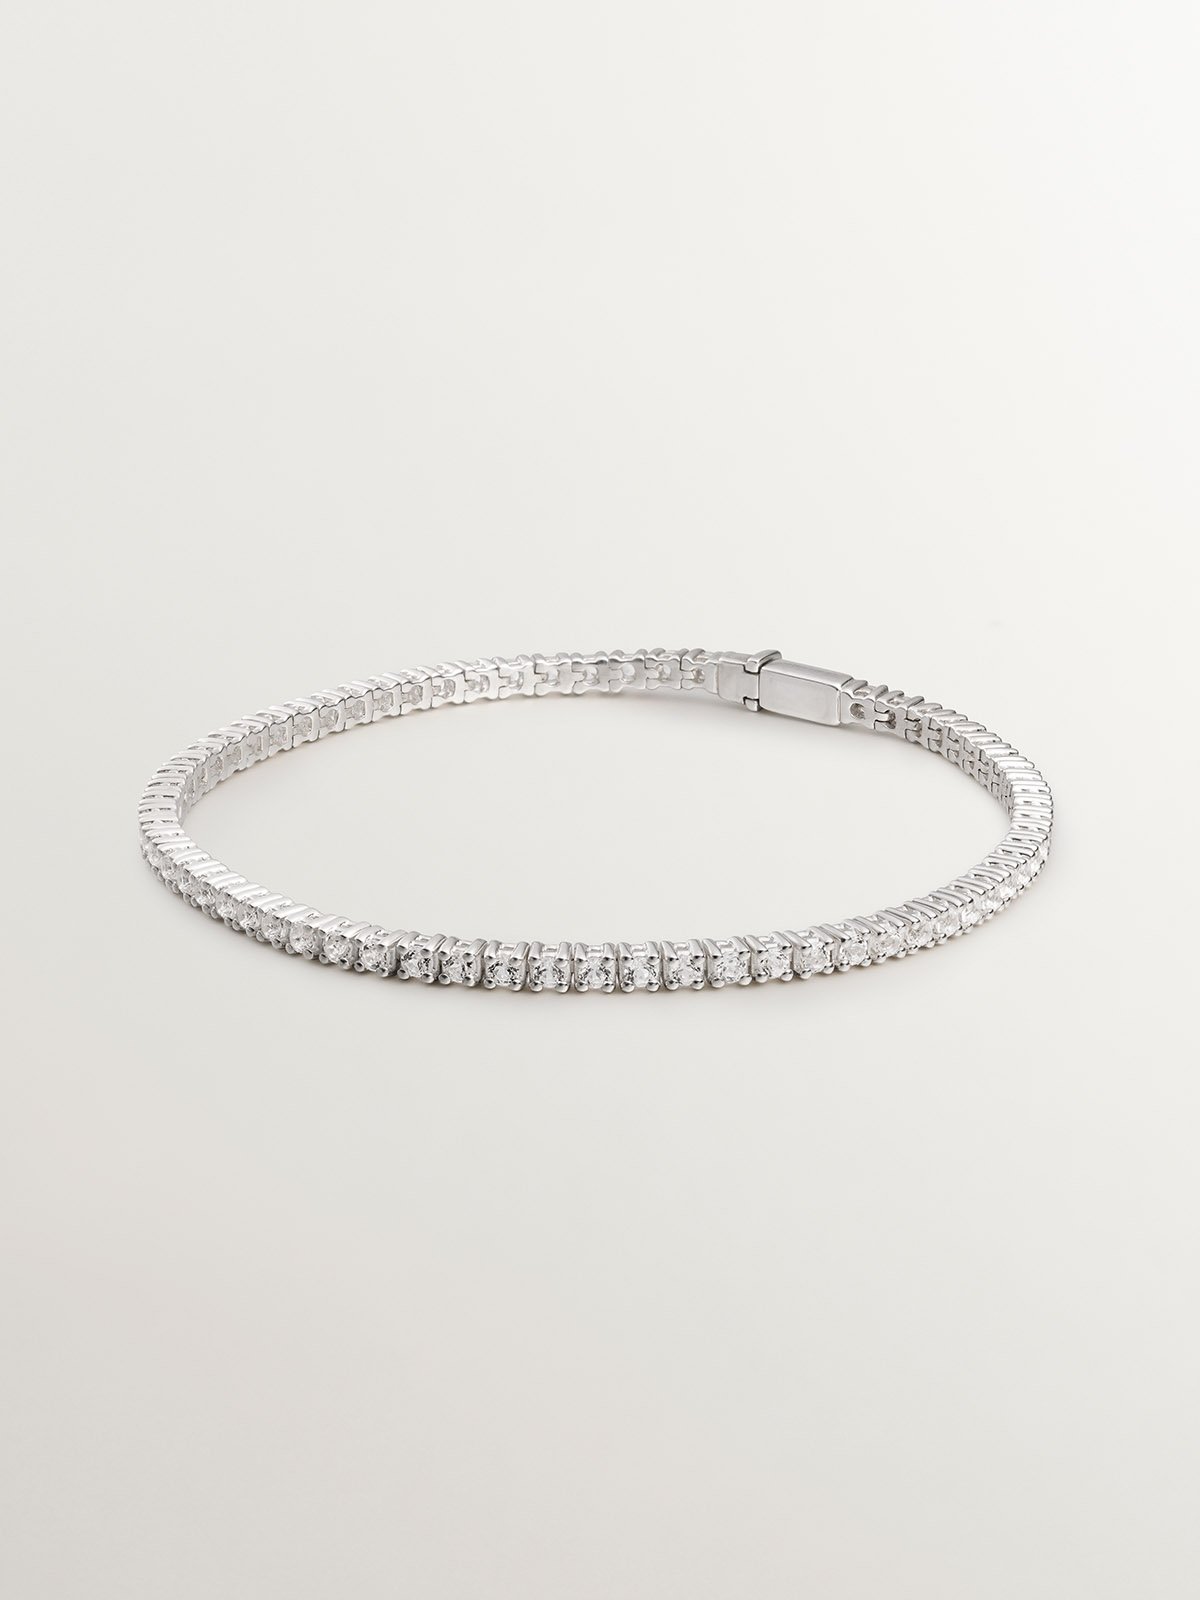 925 Silver bracelet with white topazes.